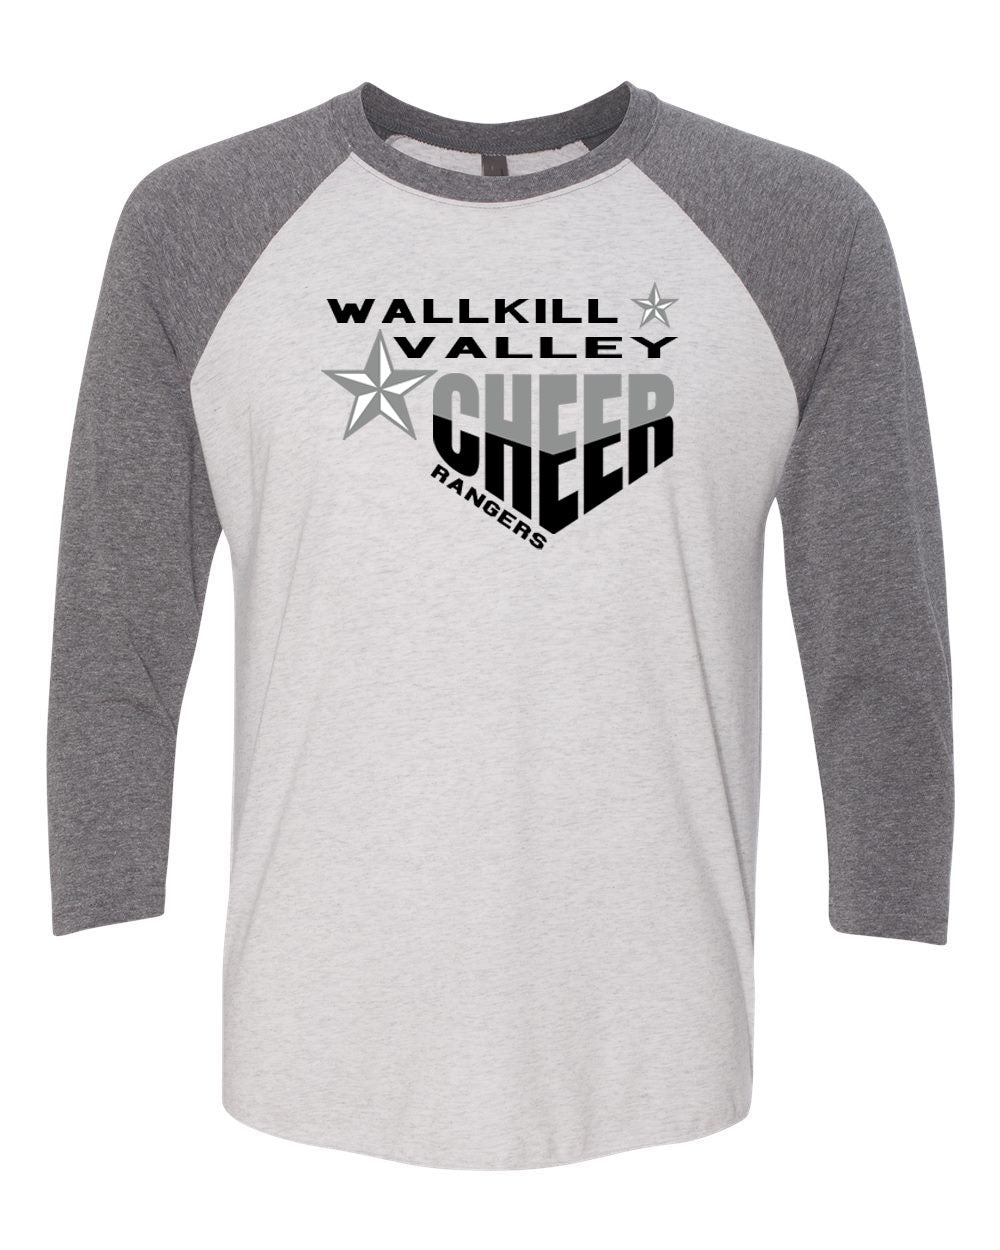 Wallkill Cheer Design 5 raglan shirt